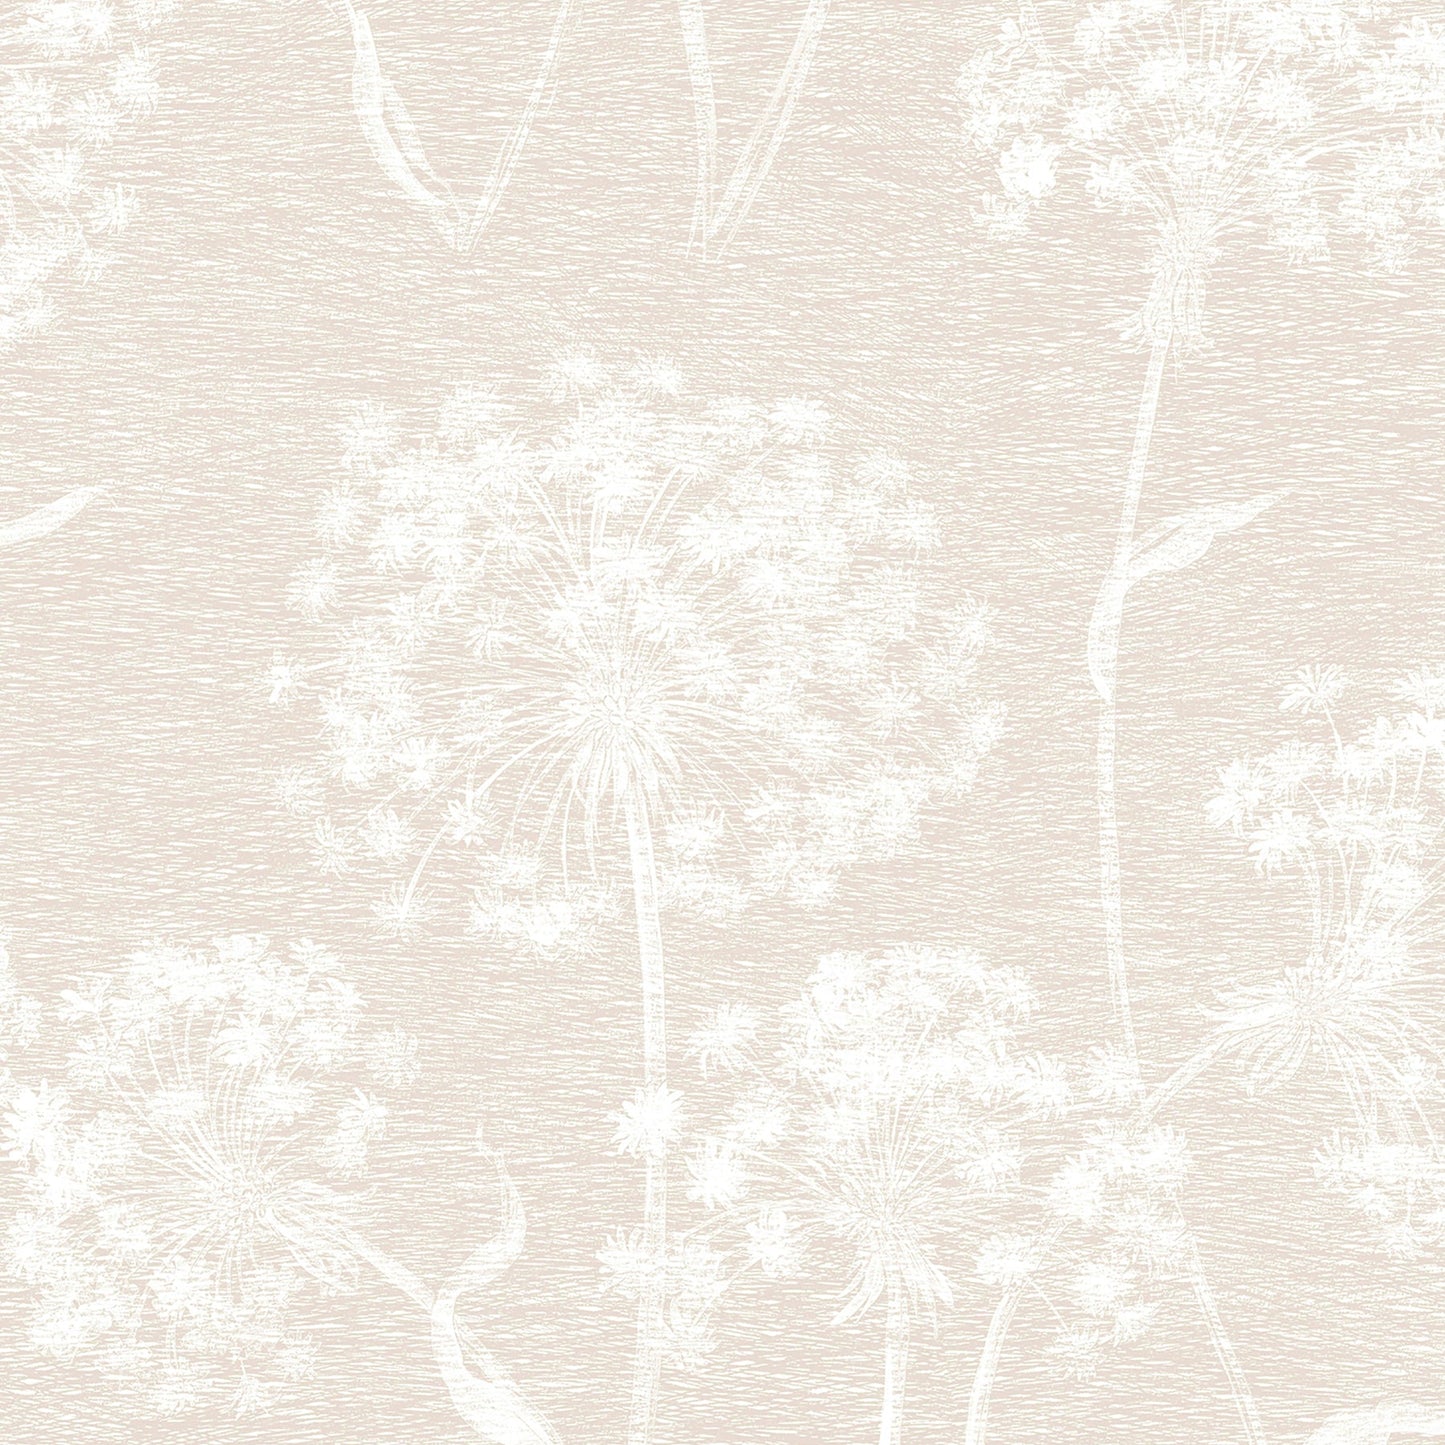 Shop 2836-24578 Shades of Grey Neutrals Florals & Flowers Wallpaper by Advantage